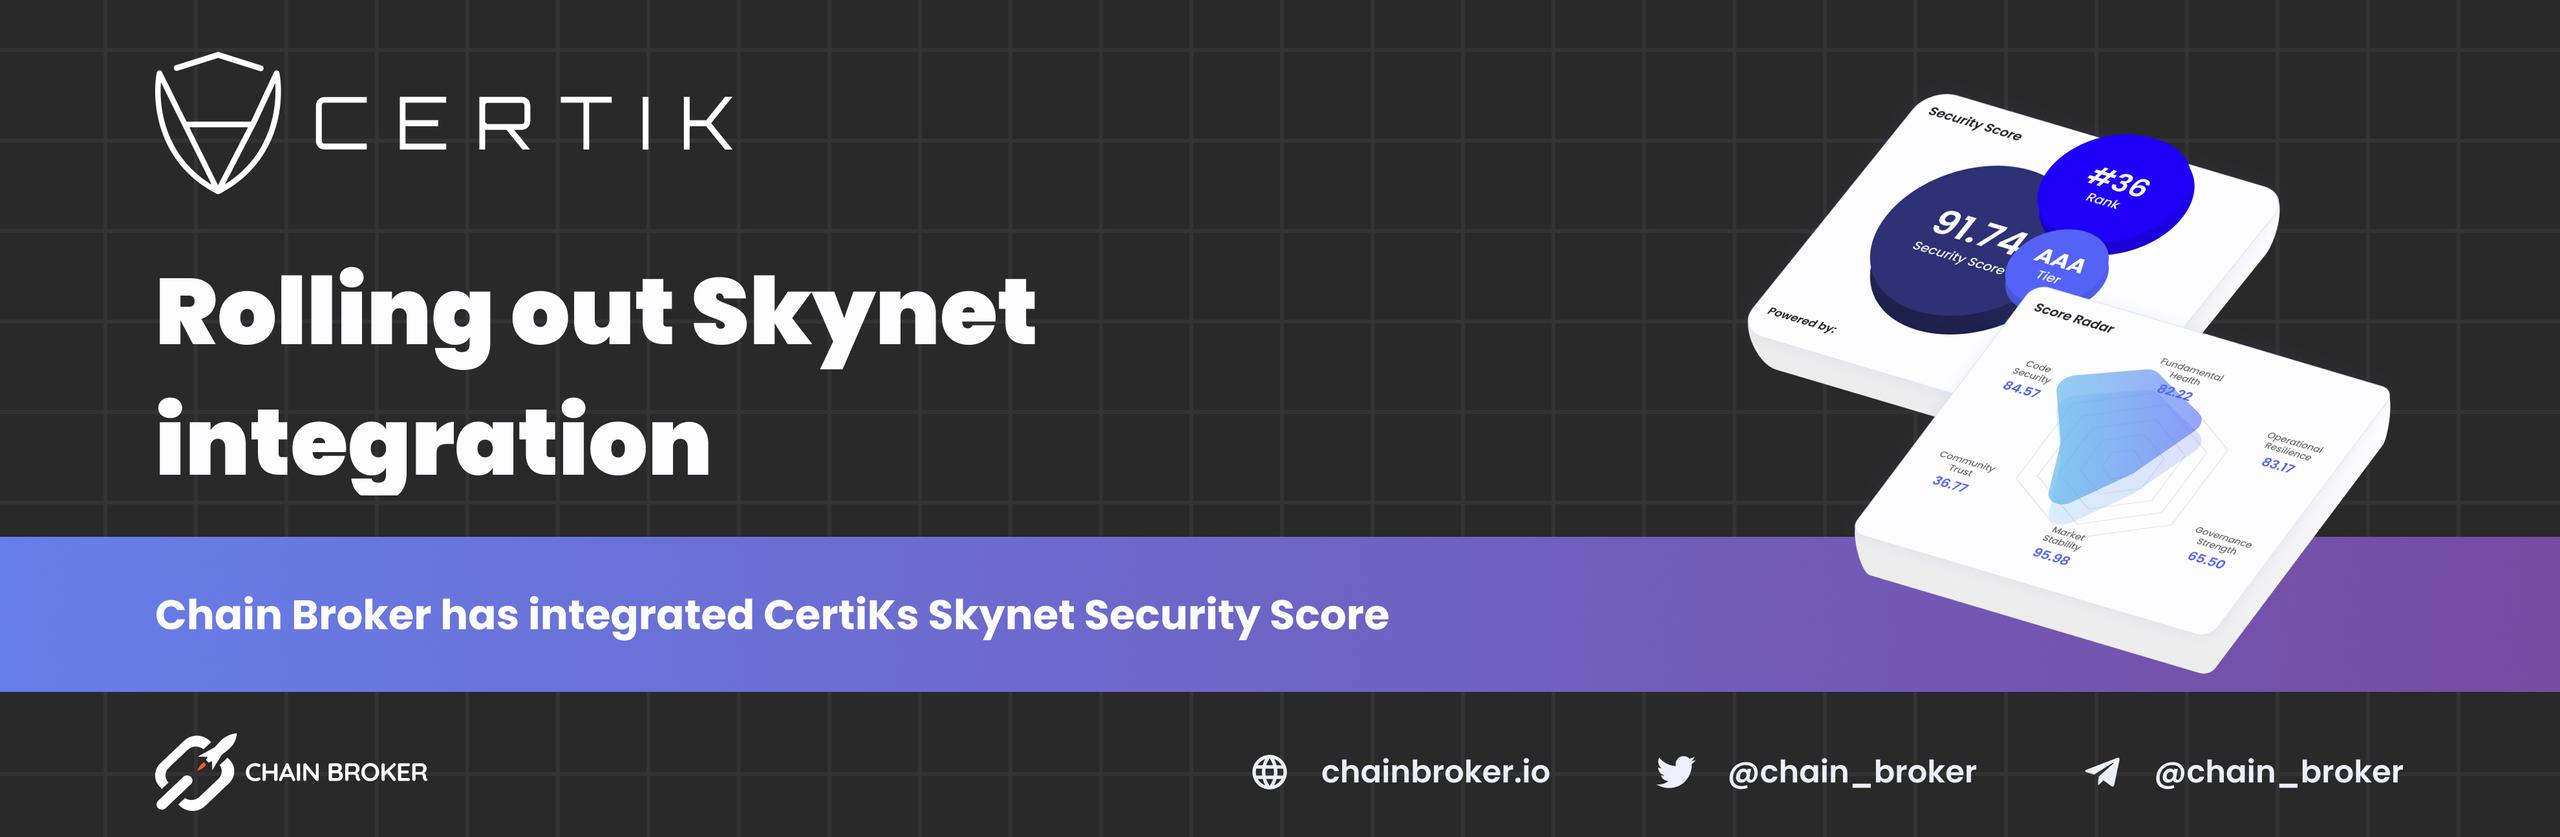 Chain Broker Integrates CertiK Skynet's Security Score